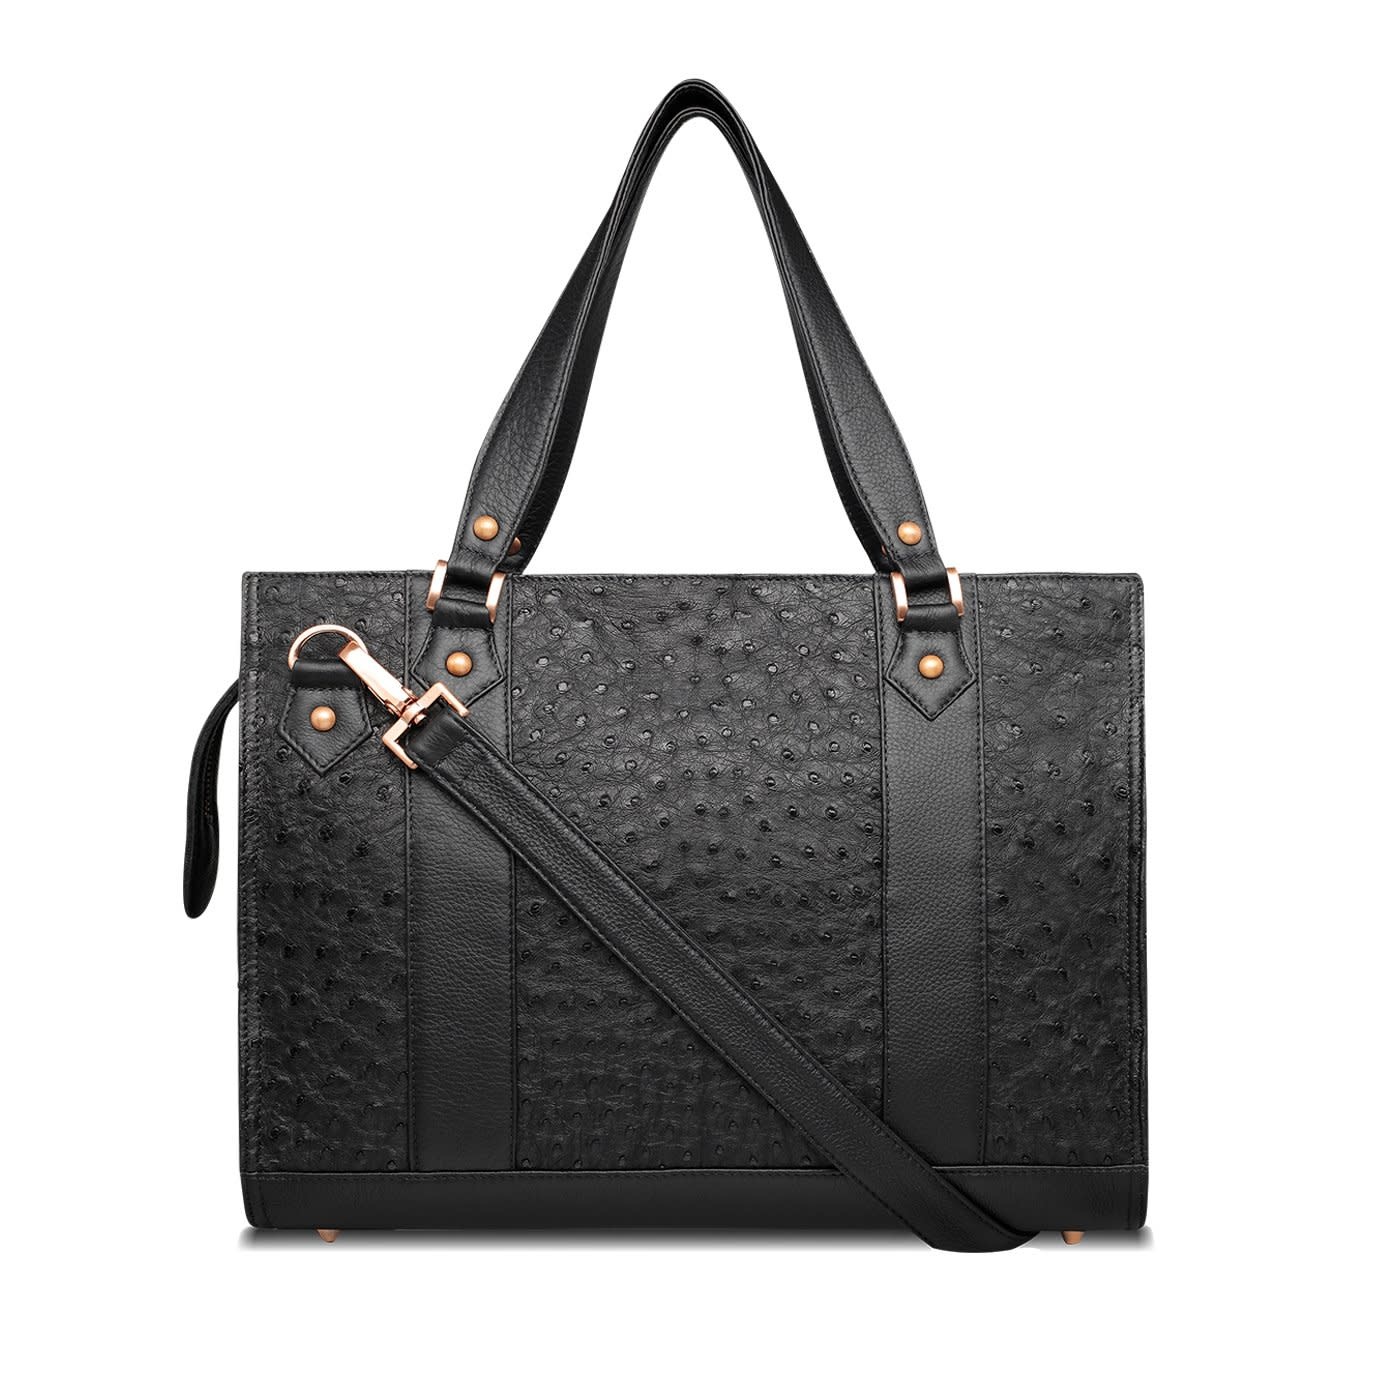 Victoria & Maude - Large Handbag Ostrich Leather  - Antique Gold Hardware - Handmade in Australia-1